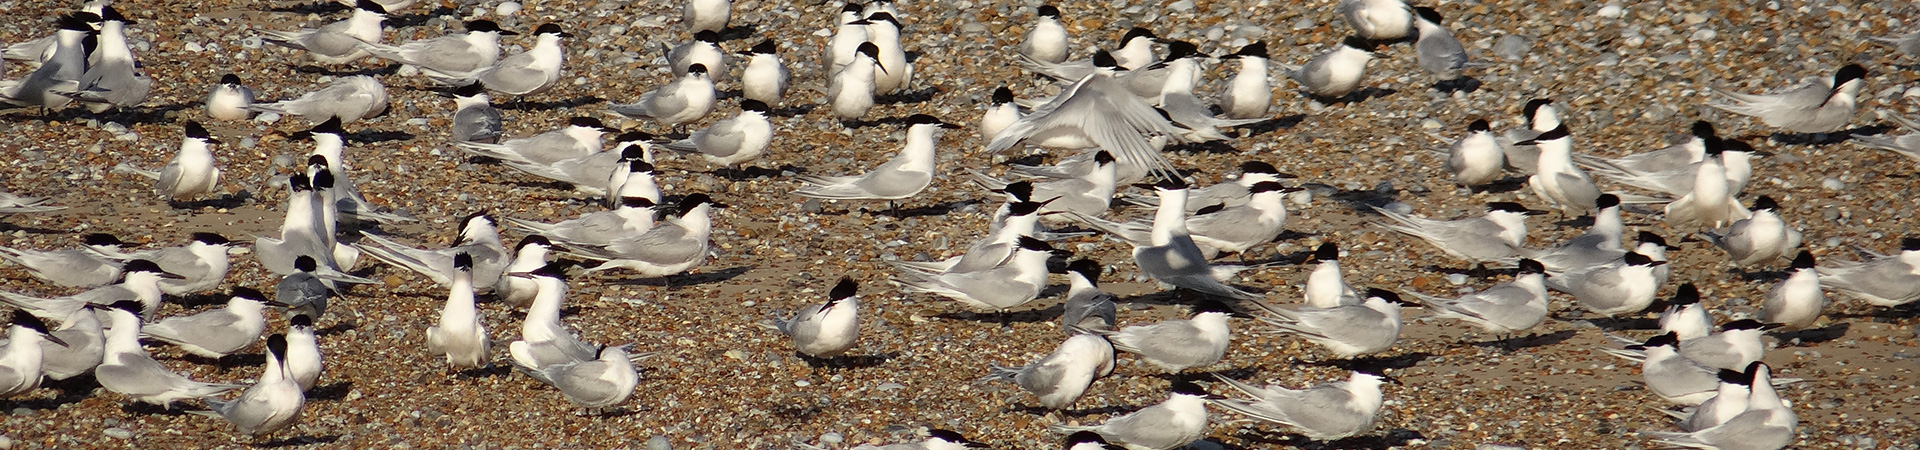 Sandwich Terns on the sand at Blakeney Point